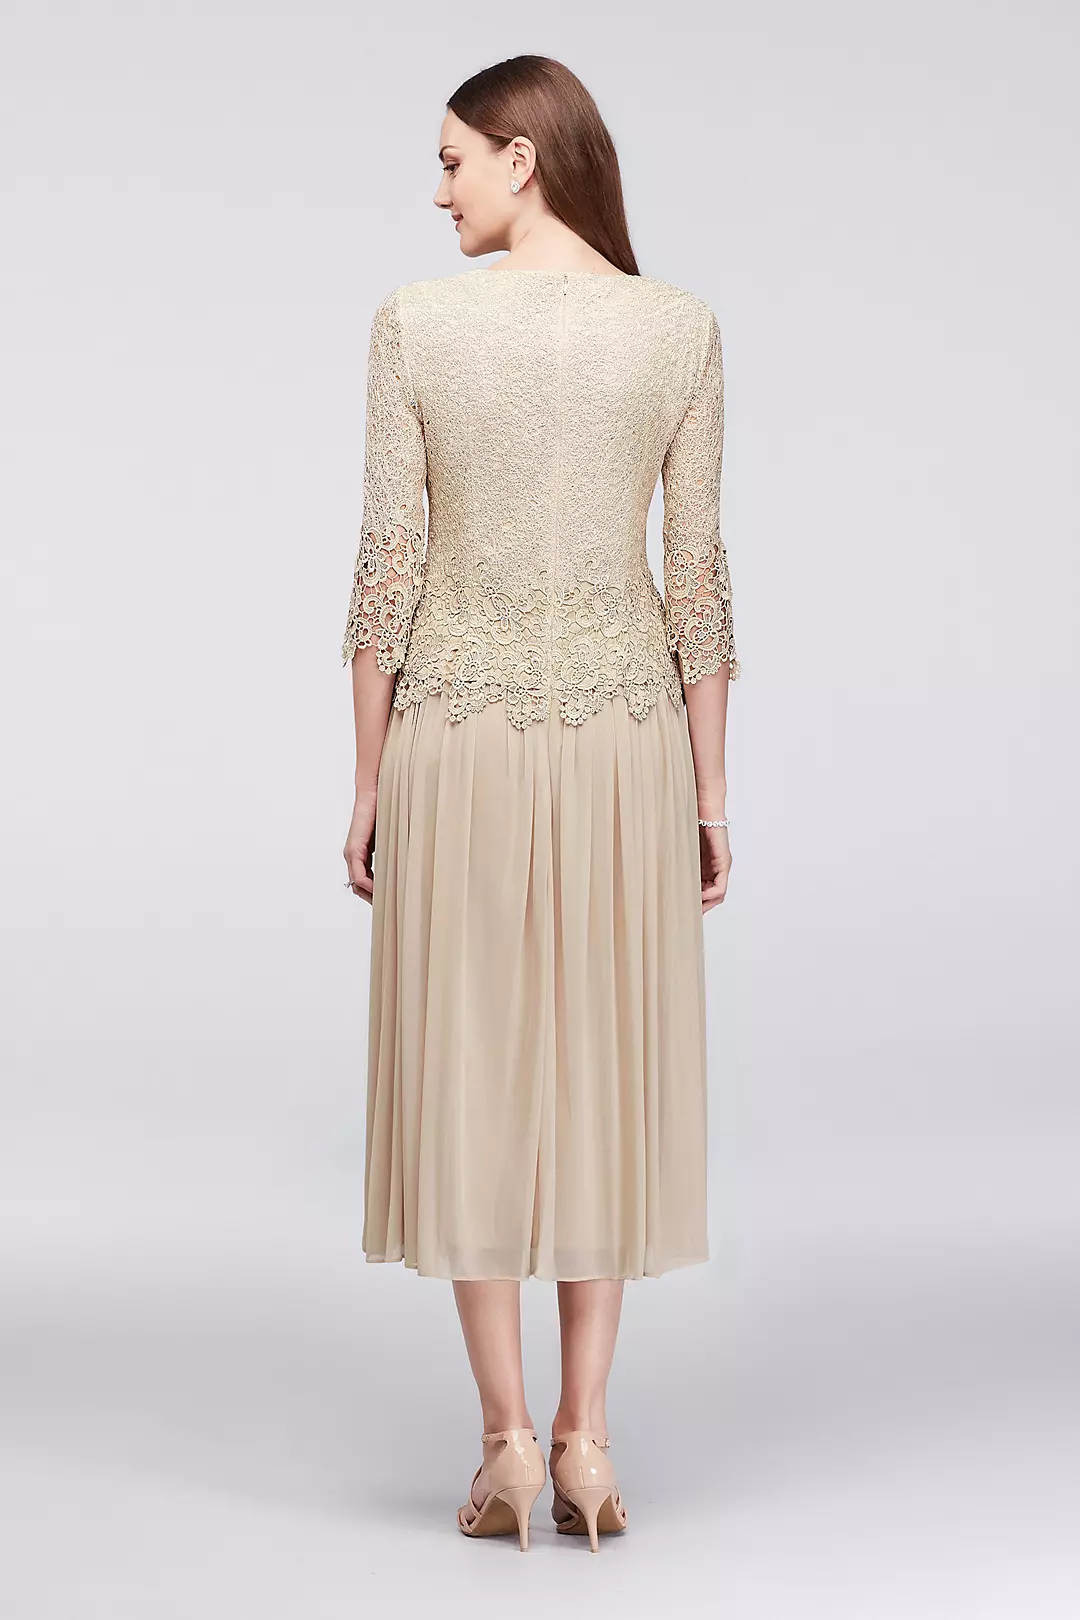 Webbed Lace and Mesh Tea-Length Dress Image 2